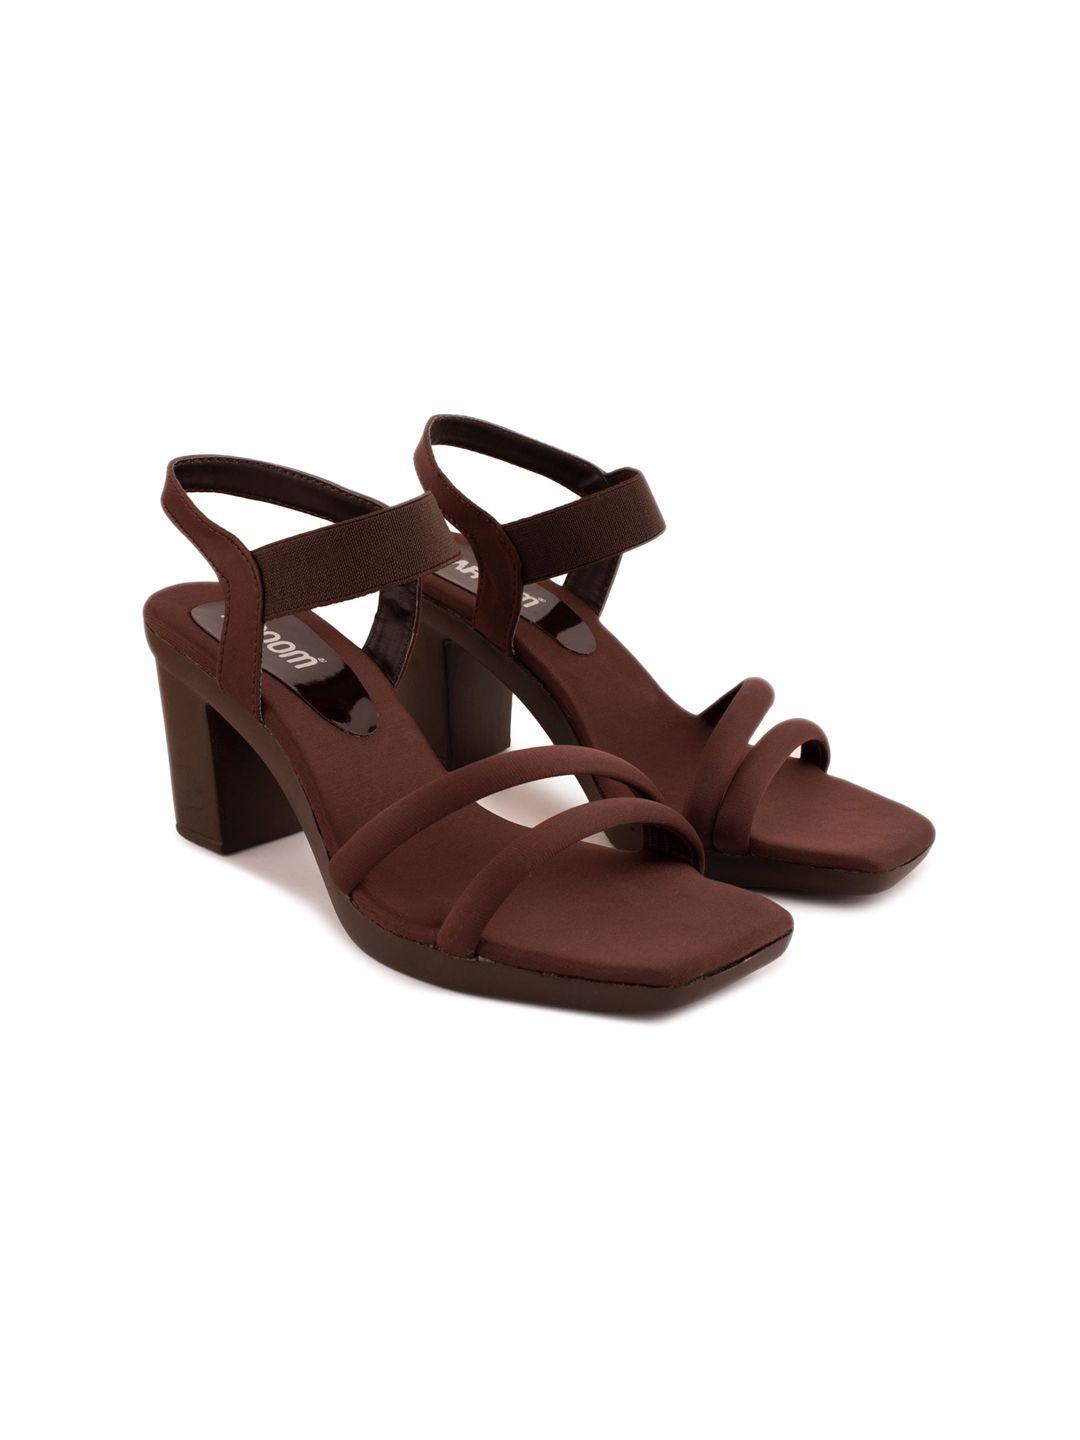 aroom-brown-block-sandals-with-buckles